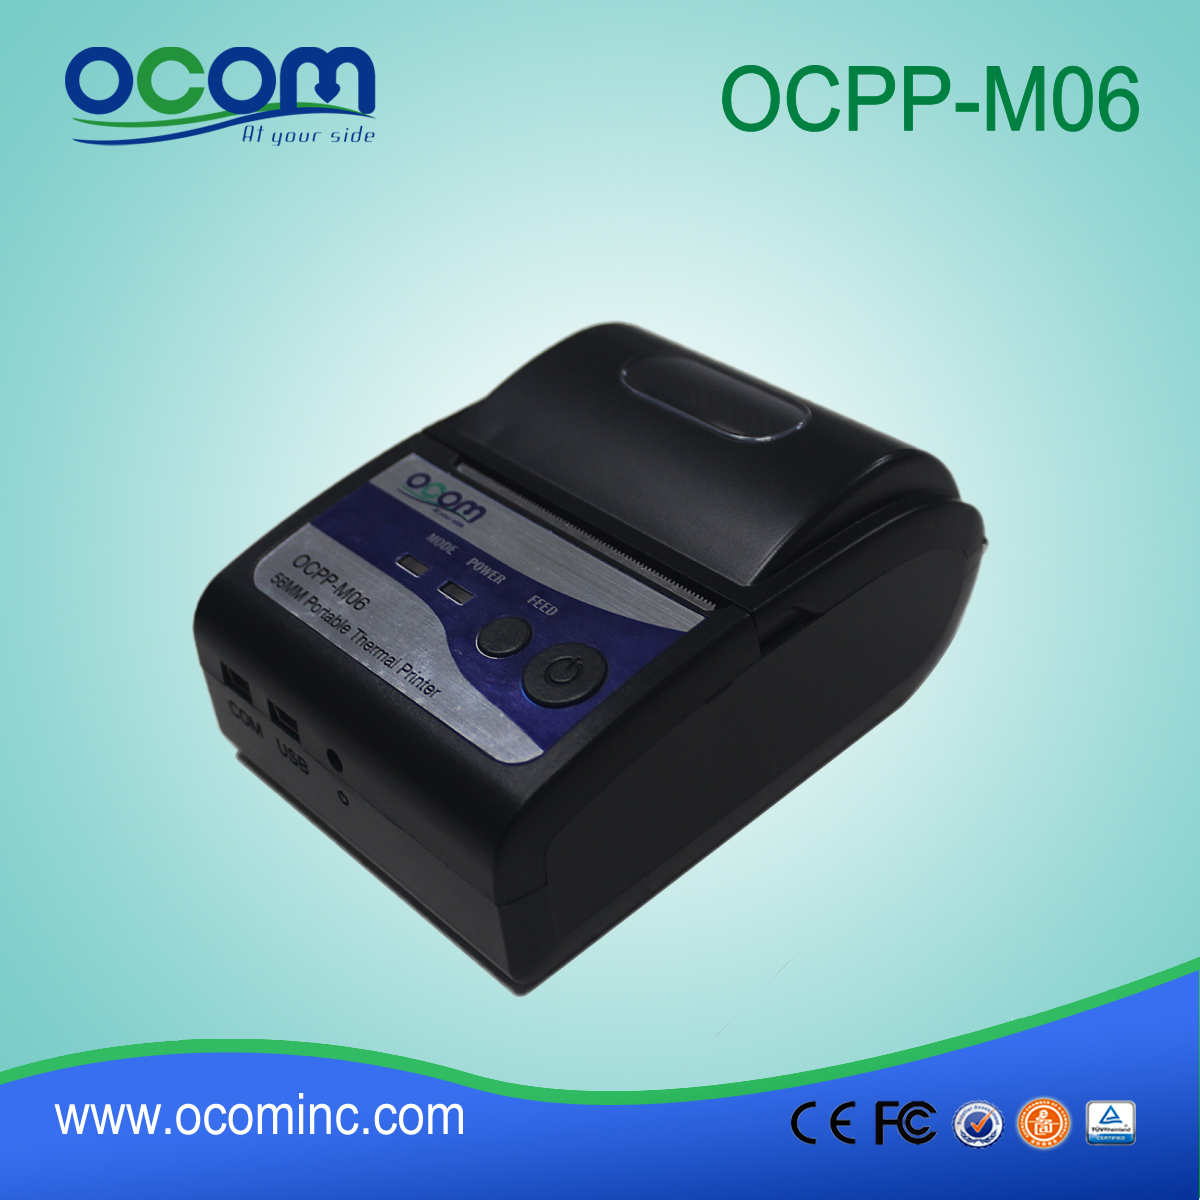 OCPP-M06: Cina fabbrica-OCOM buon mercato 58 pos stampante POS